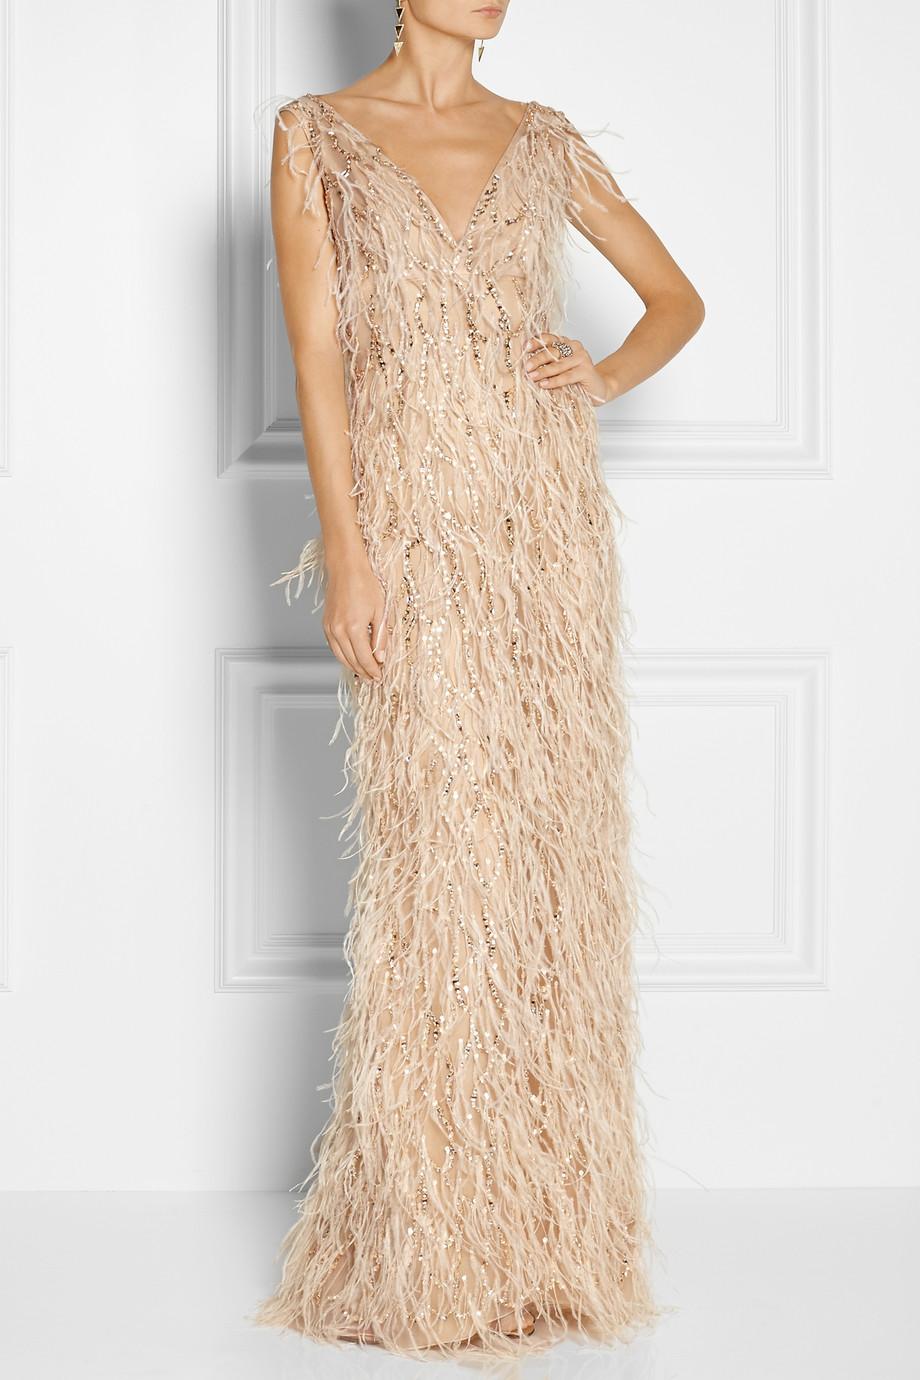 Women's New Museum Oscar De La Renta Ostrich Feather Crystal-Embellished Tulle Dress 8 For Sale